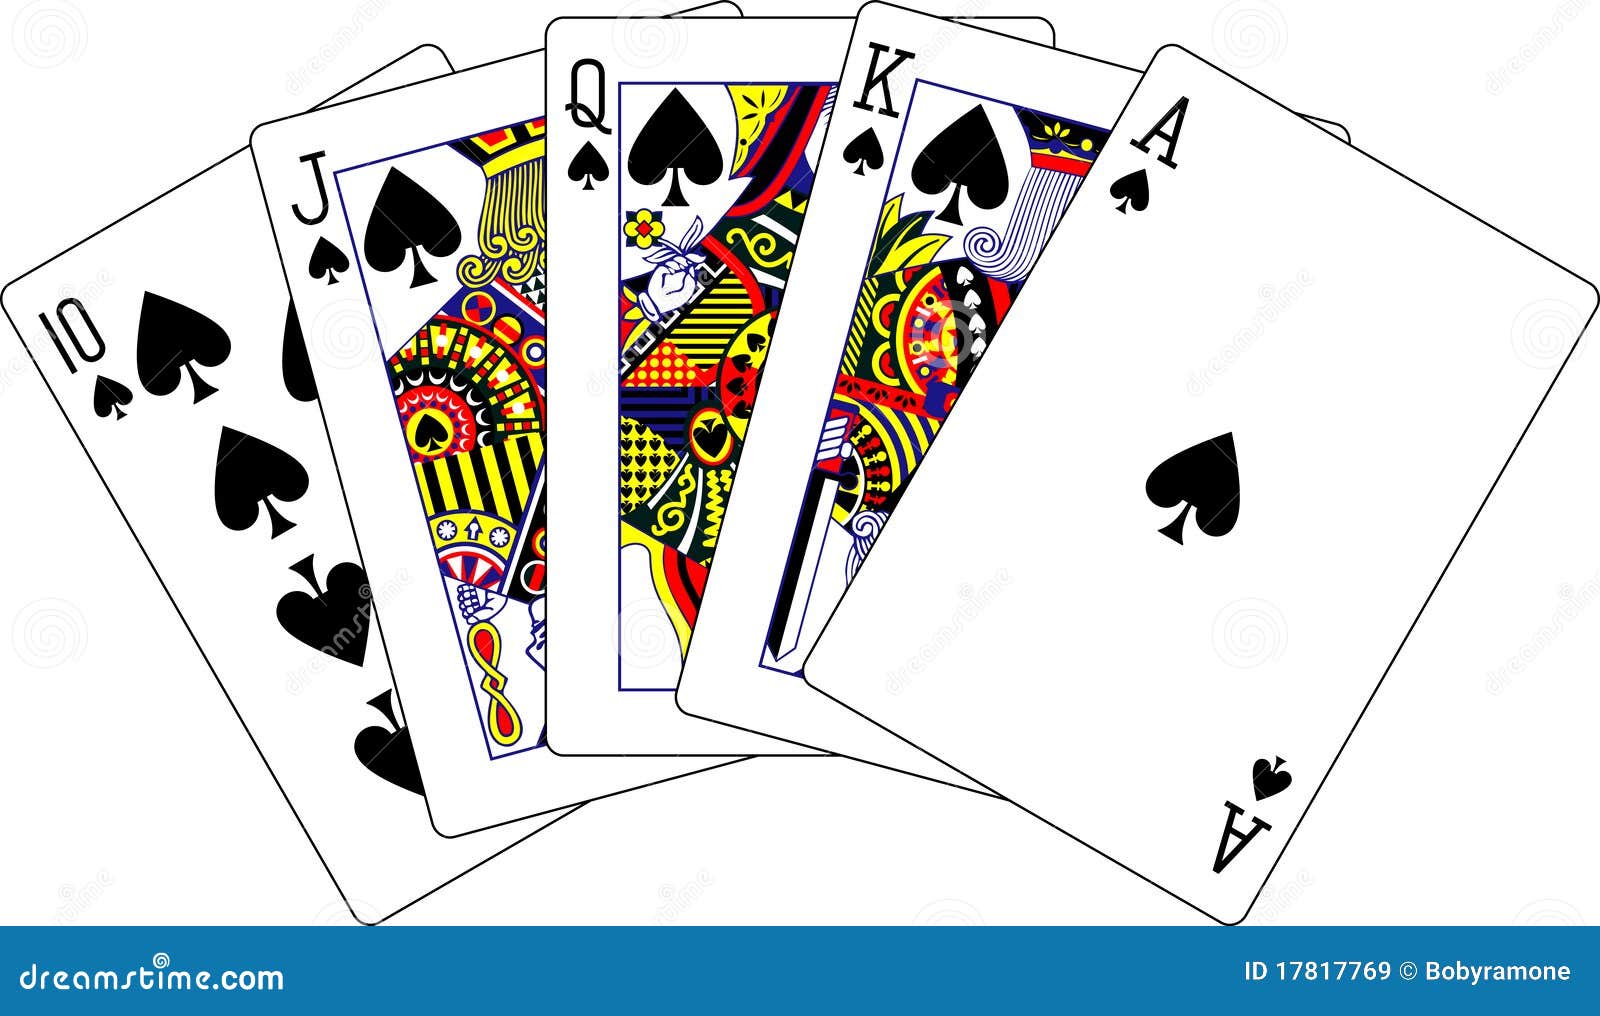 royal flush spades playing cards